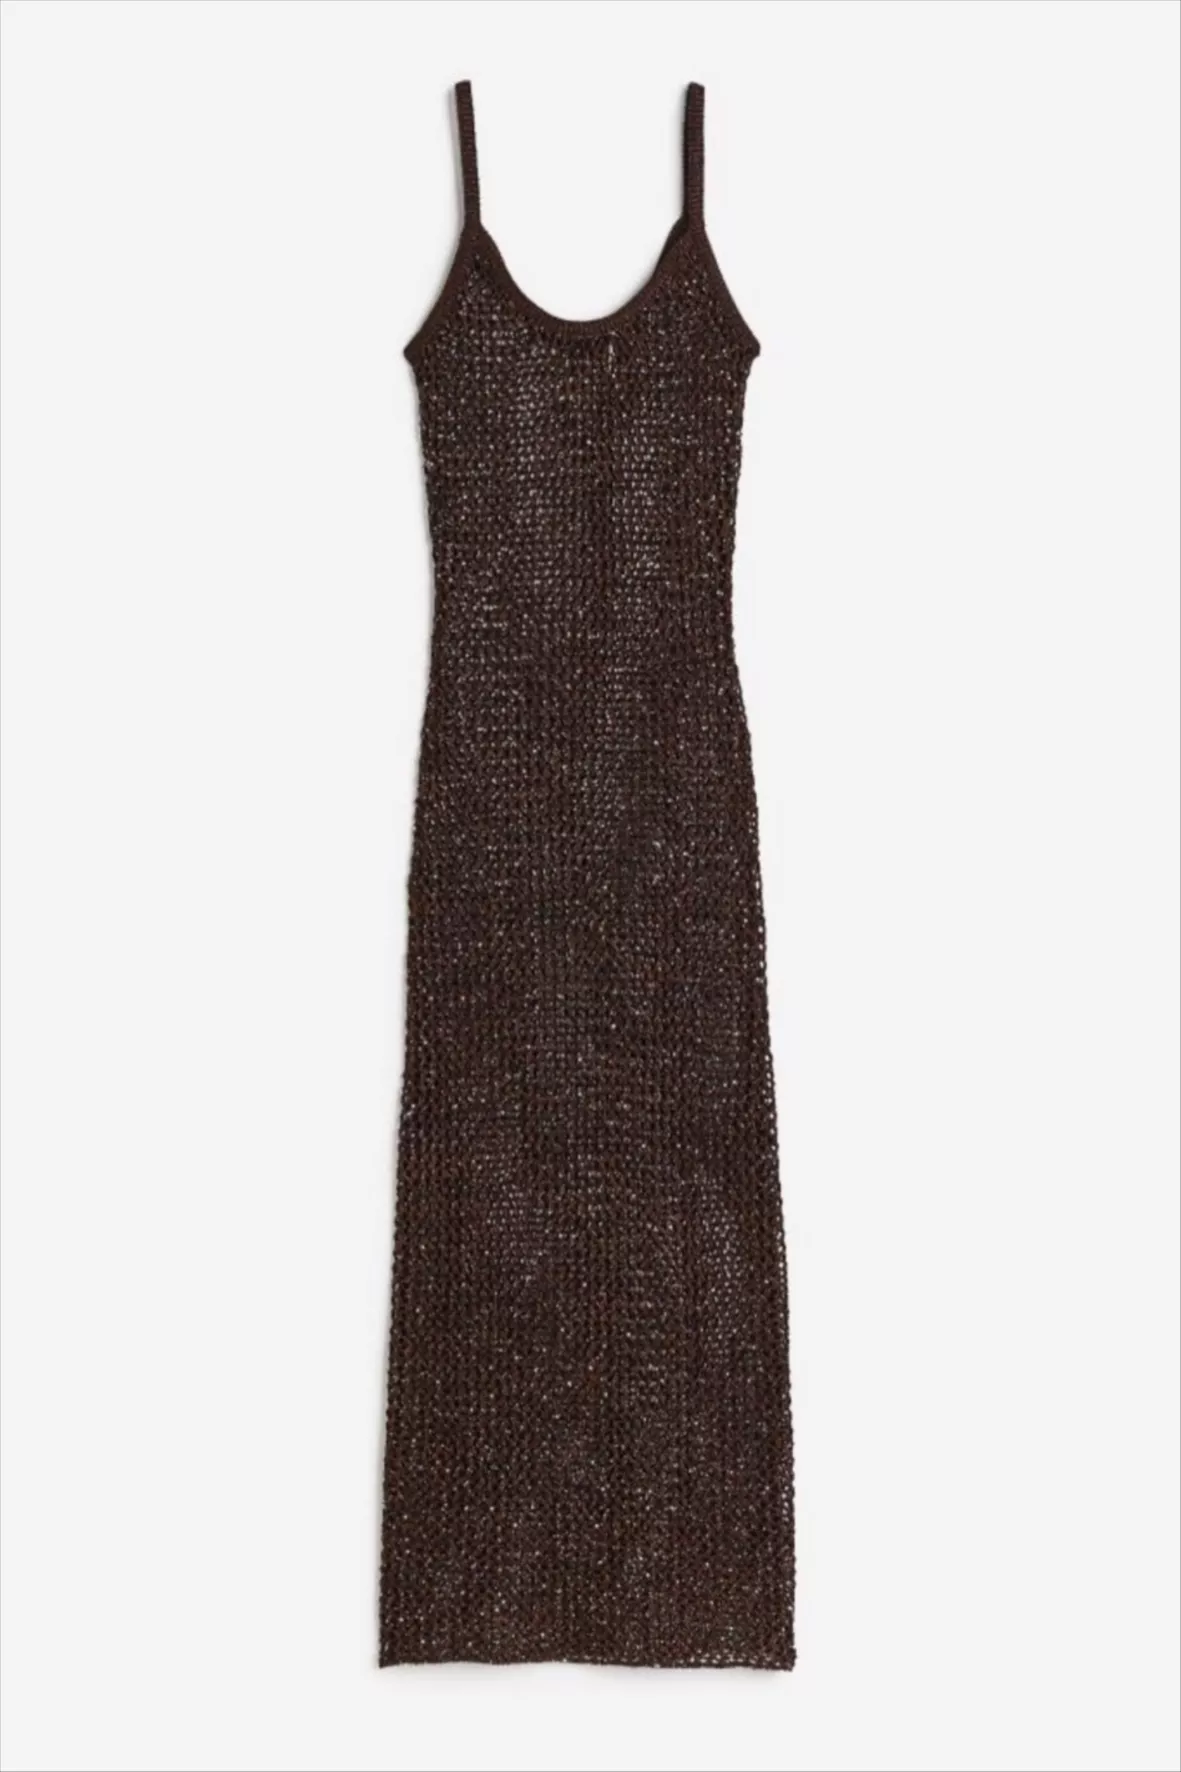 Crochet-look dress curated on LTK